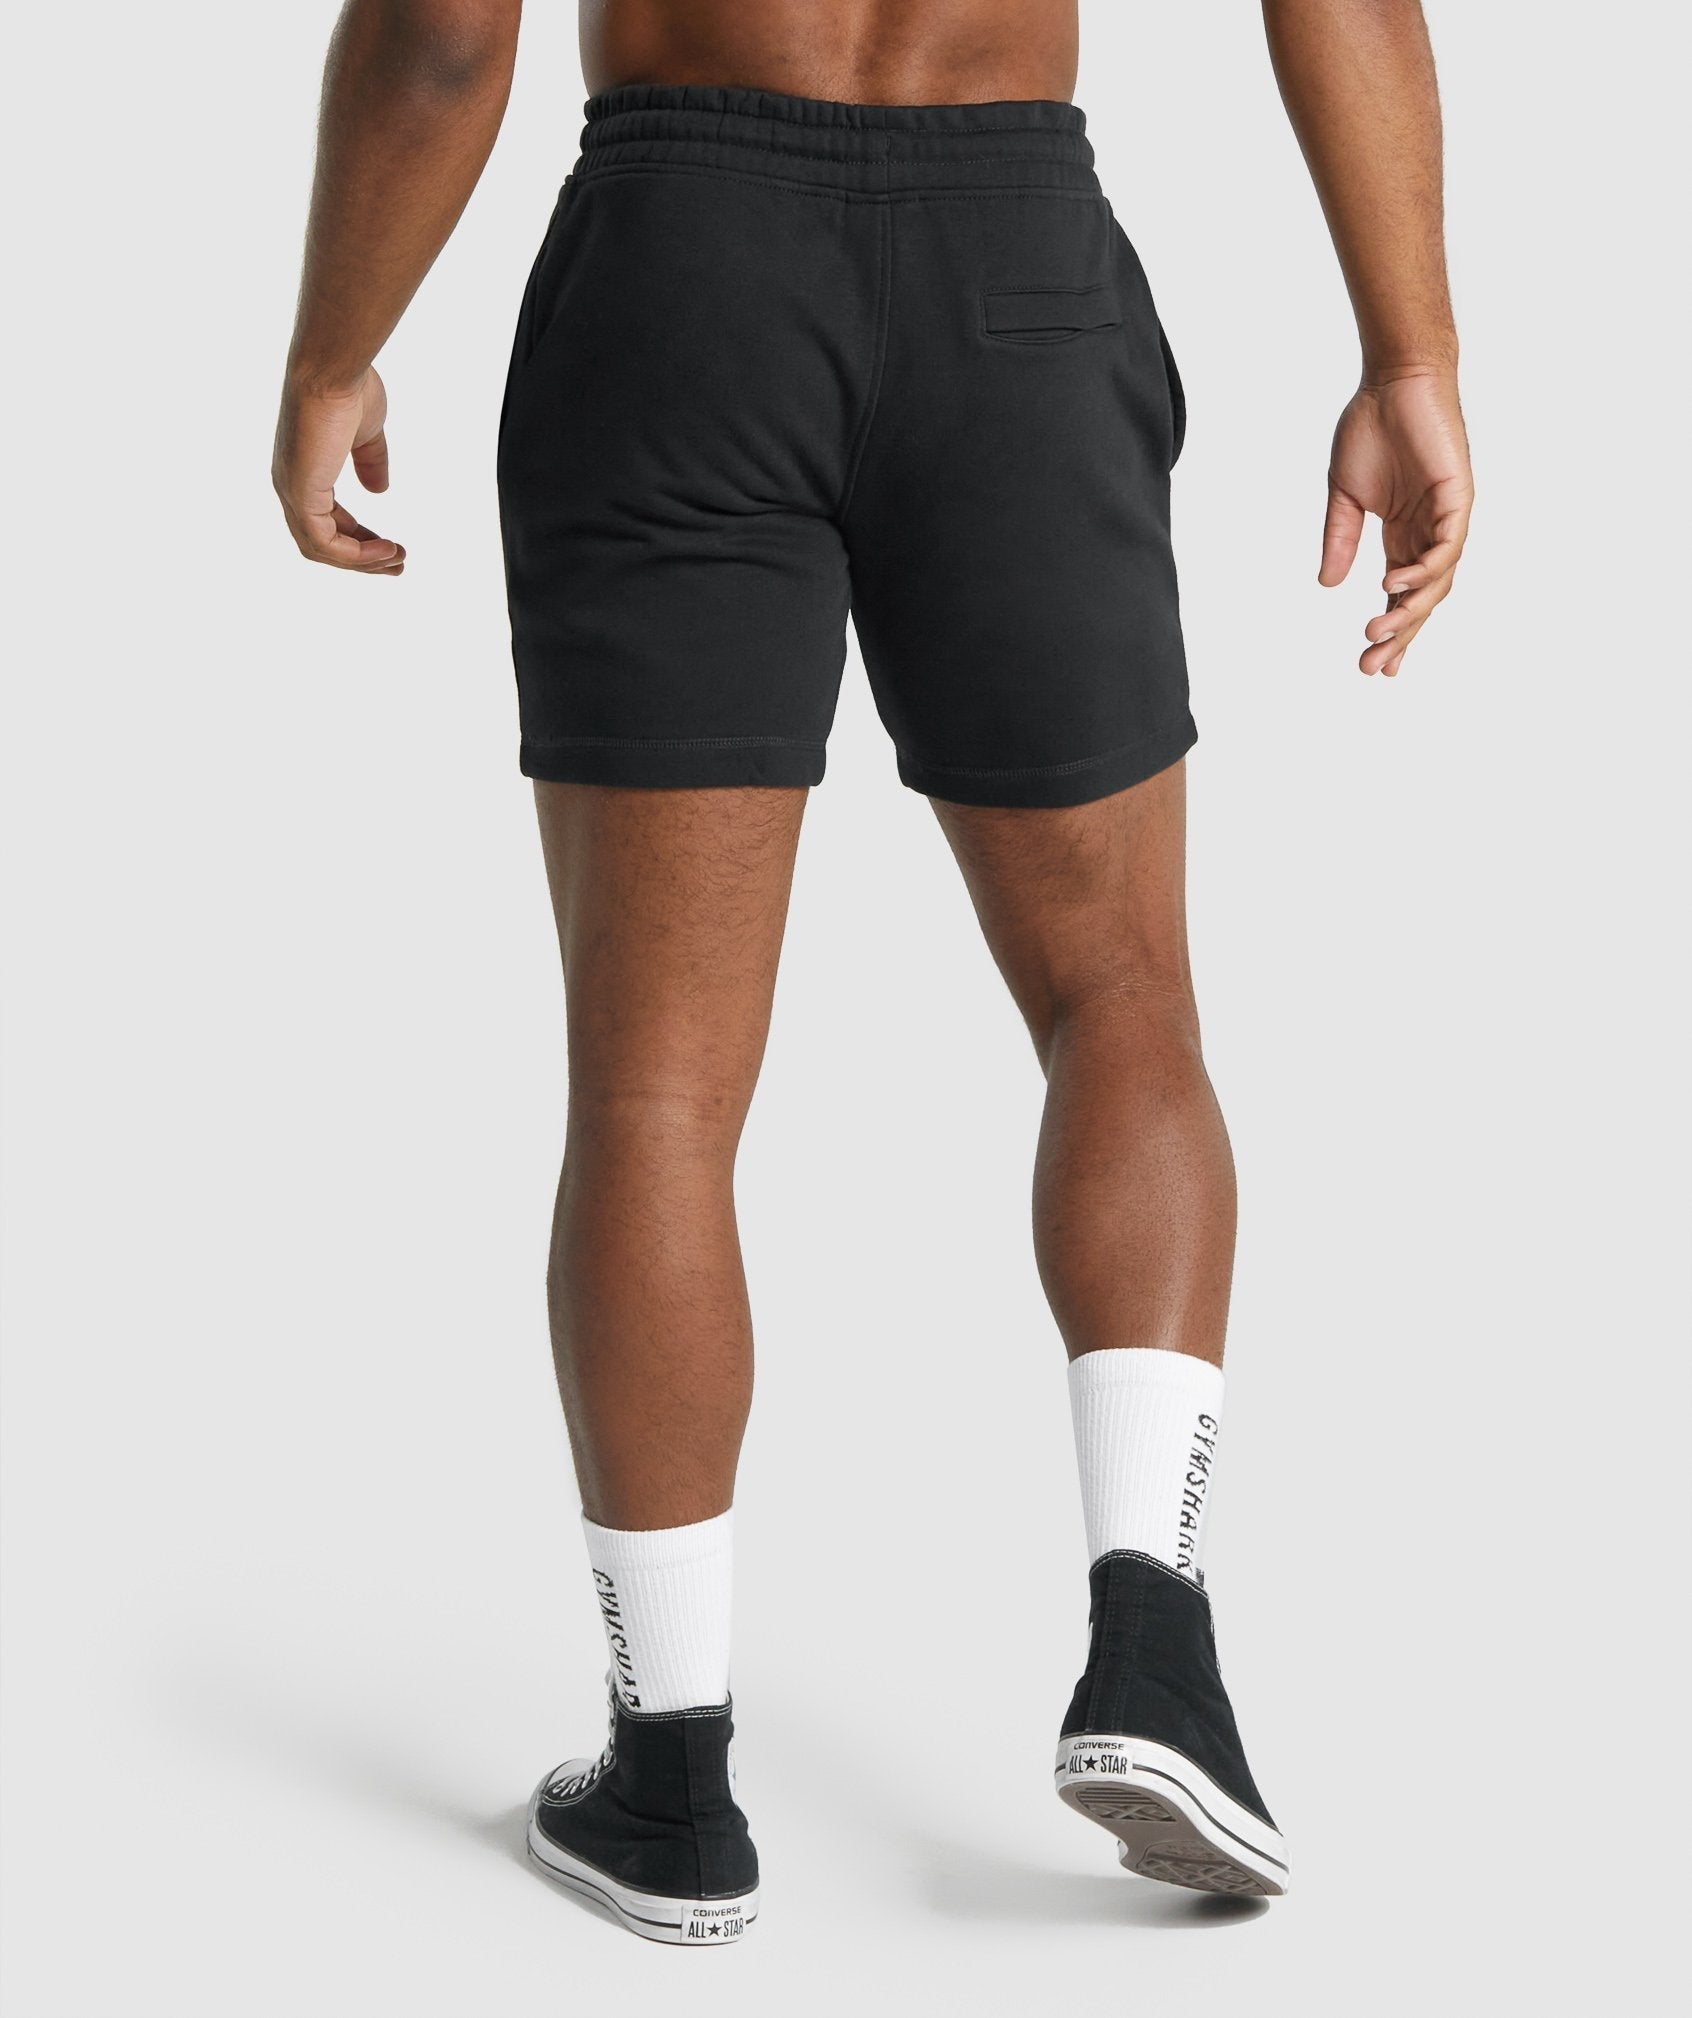 GYMSHARK Gymshark ASPECT 7 - Shorts - Men's - light grey - Private Sport  Shop